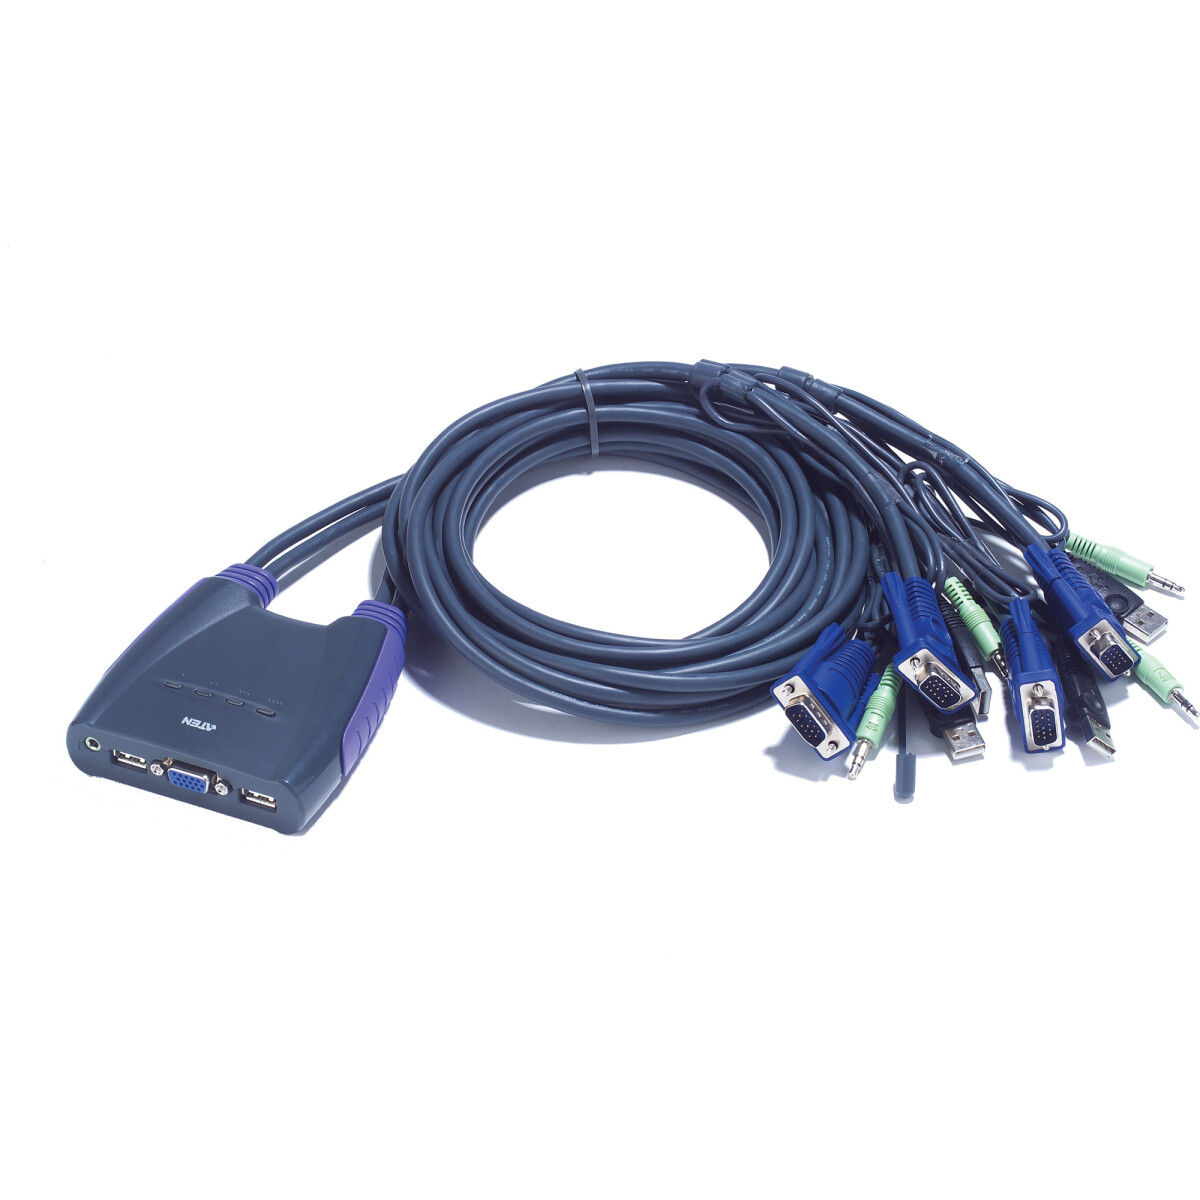 ATEN CS64US Cable KVM switch 4-port, USB, Audio